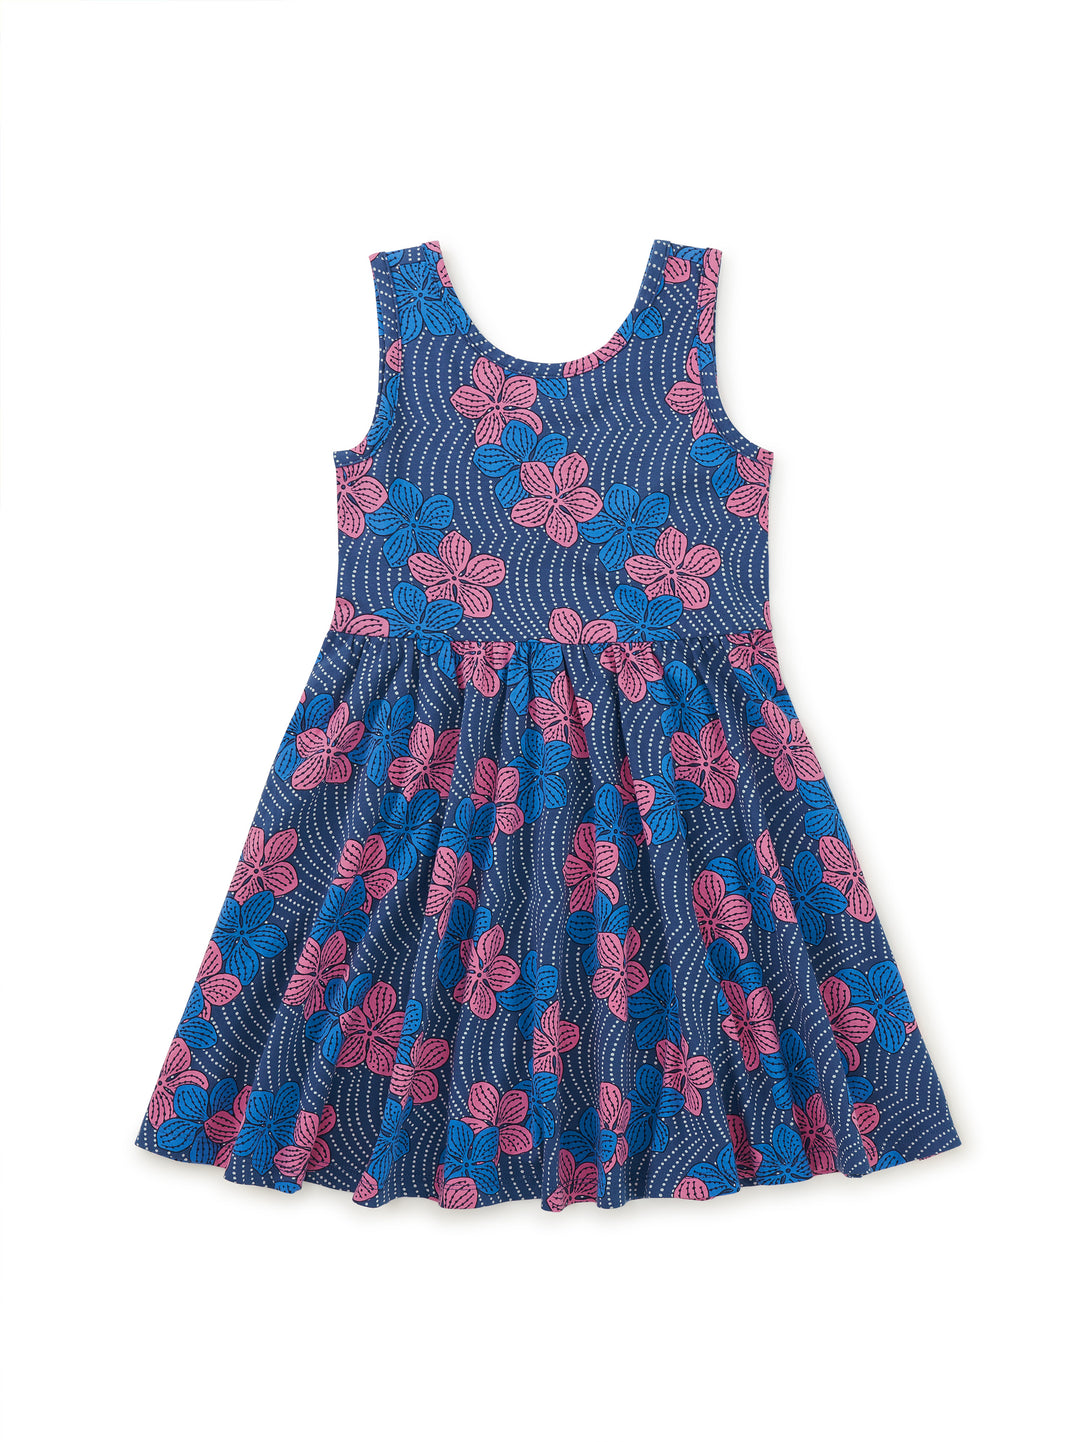 Tea Collection Sleeveless Ballet Dress, Wavy Plumeria |Mockingbird Baby & Kids